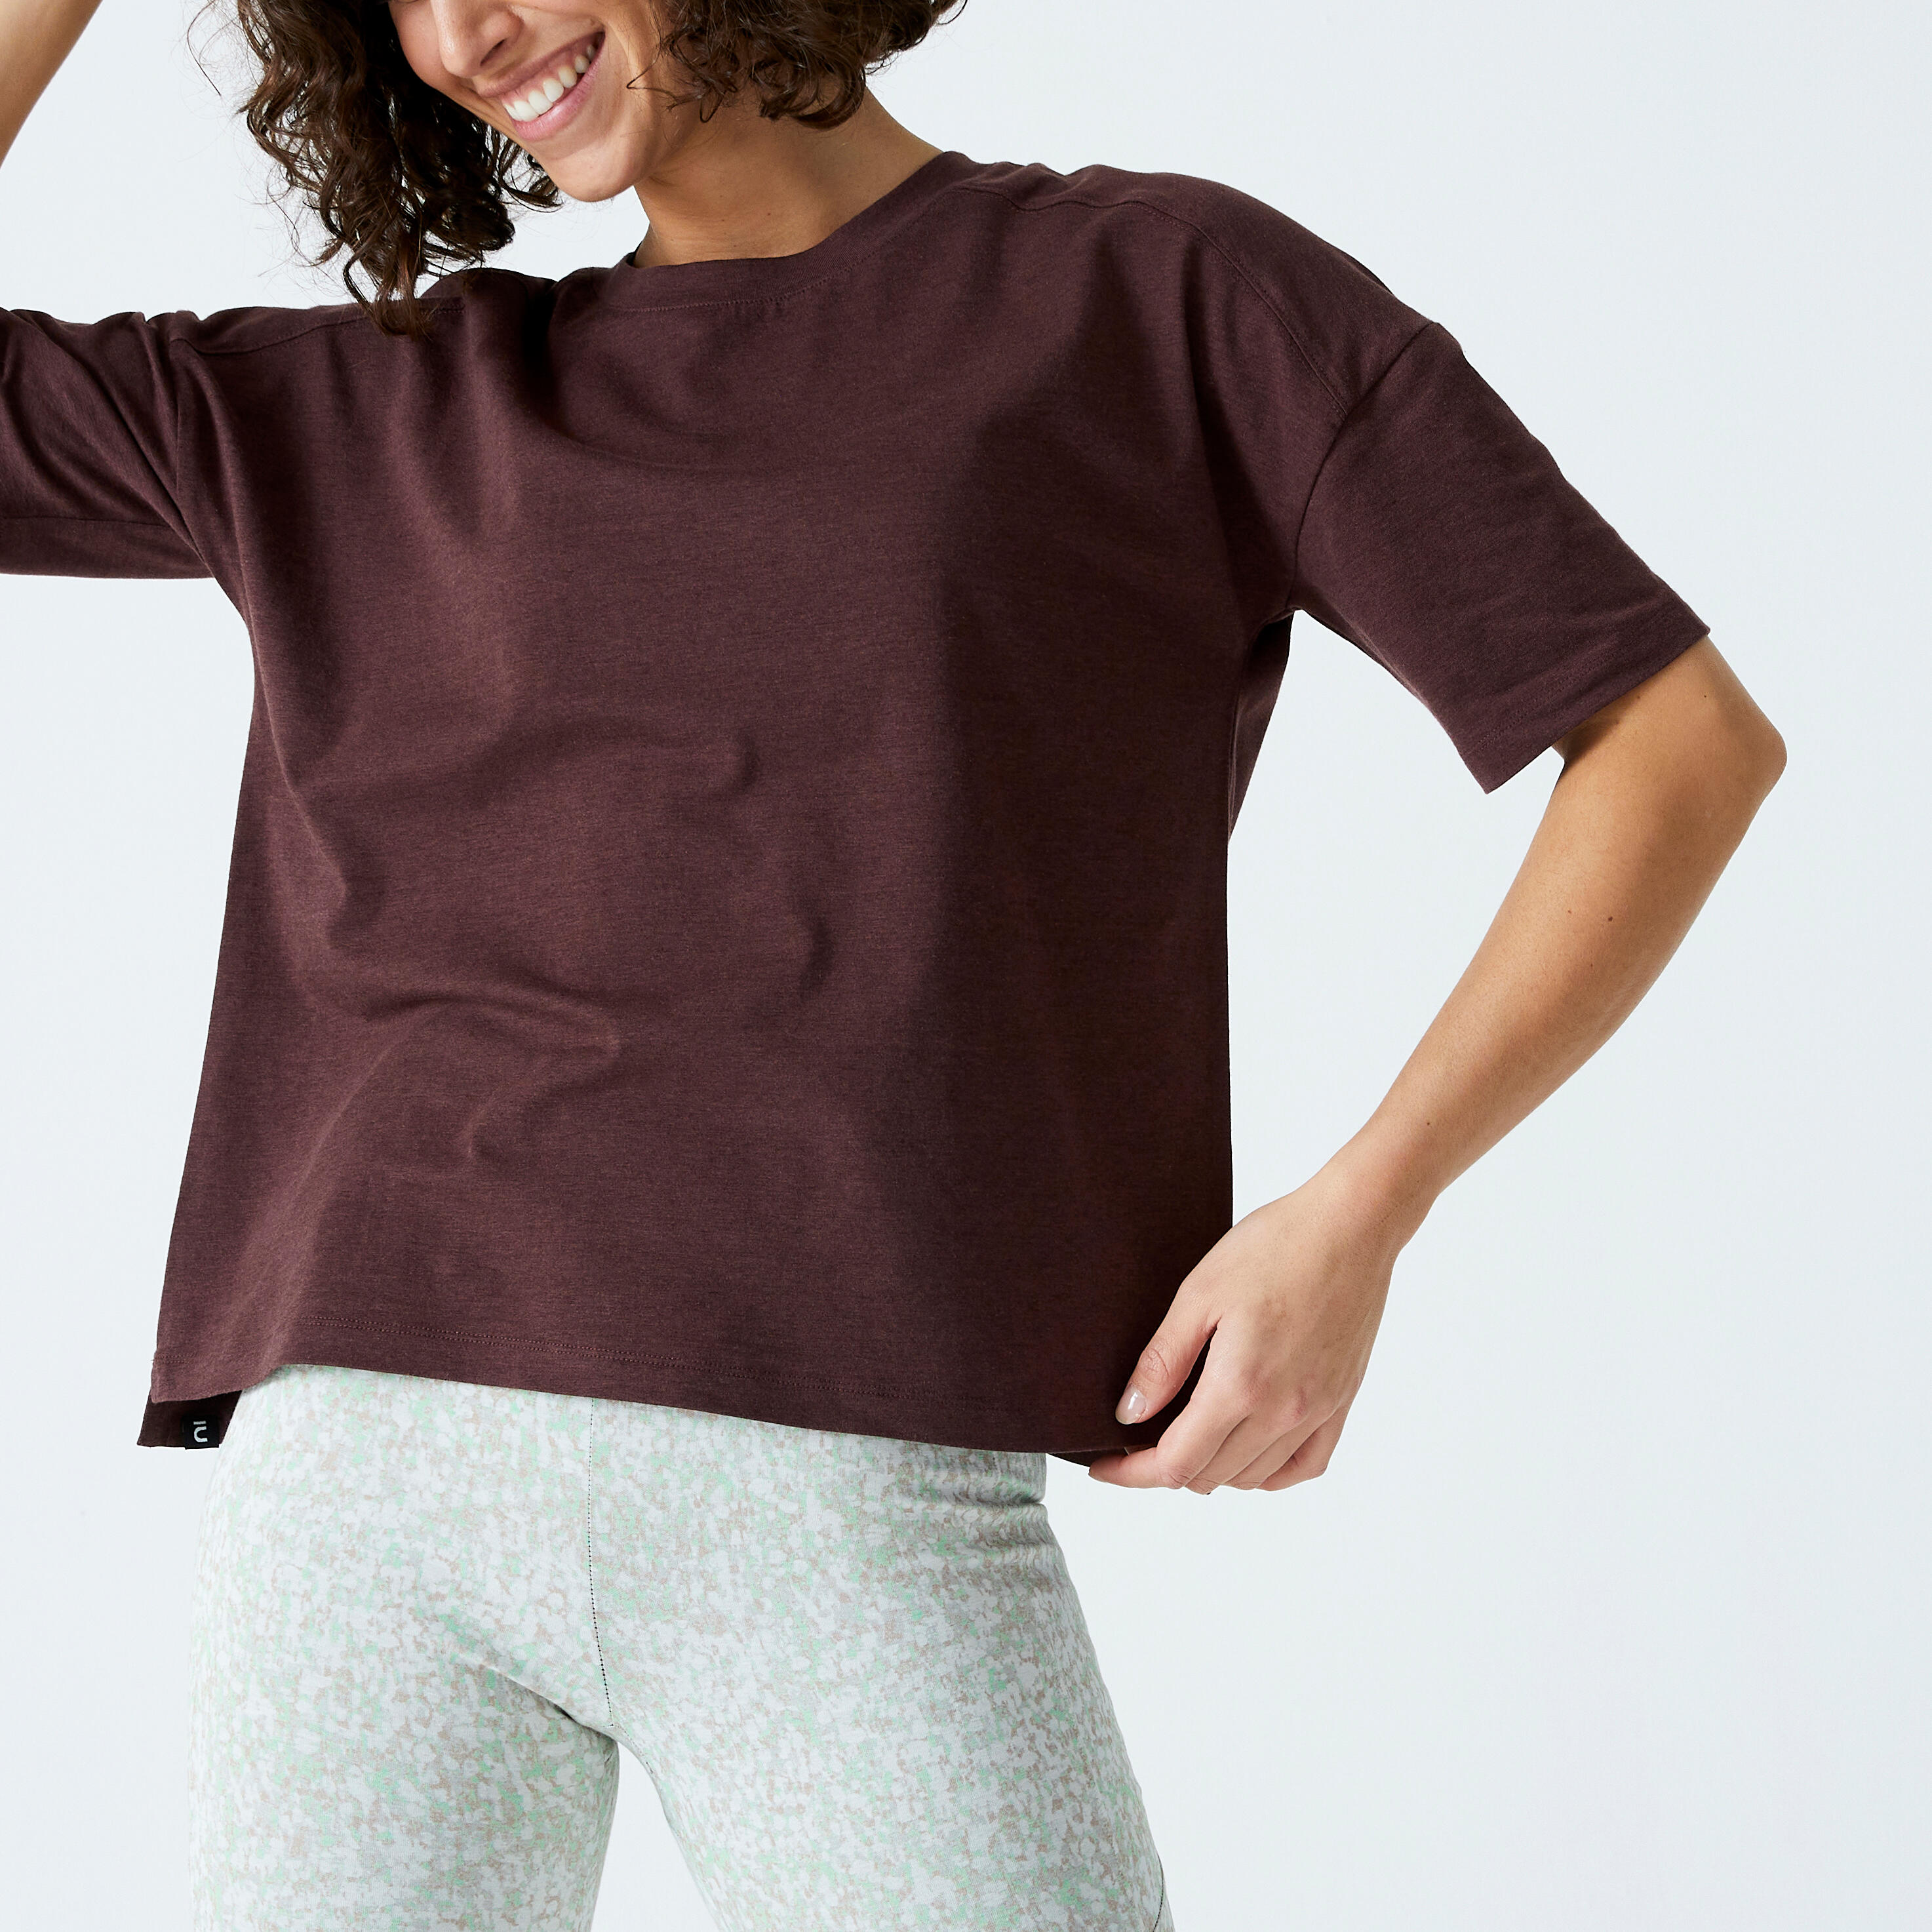 Women's Loose-Fit Fitness T-Shirt 520 - Dark Brown 4/5